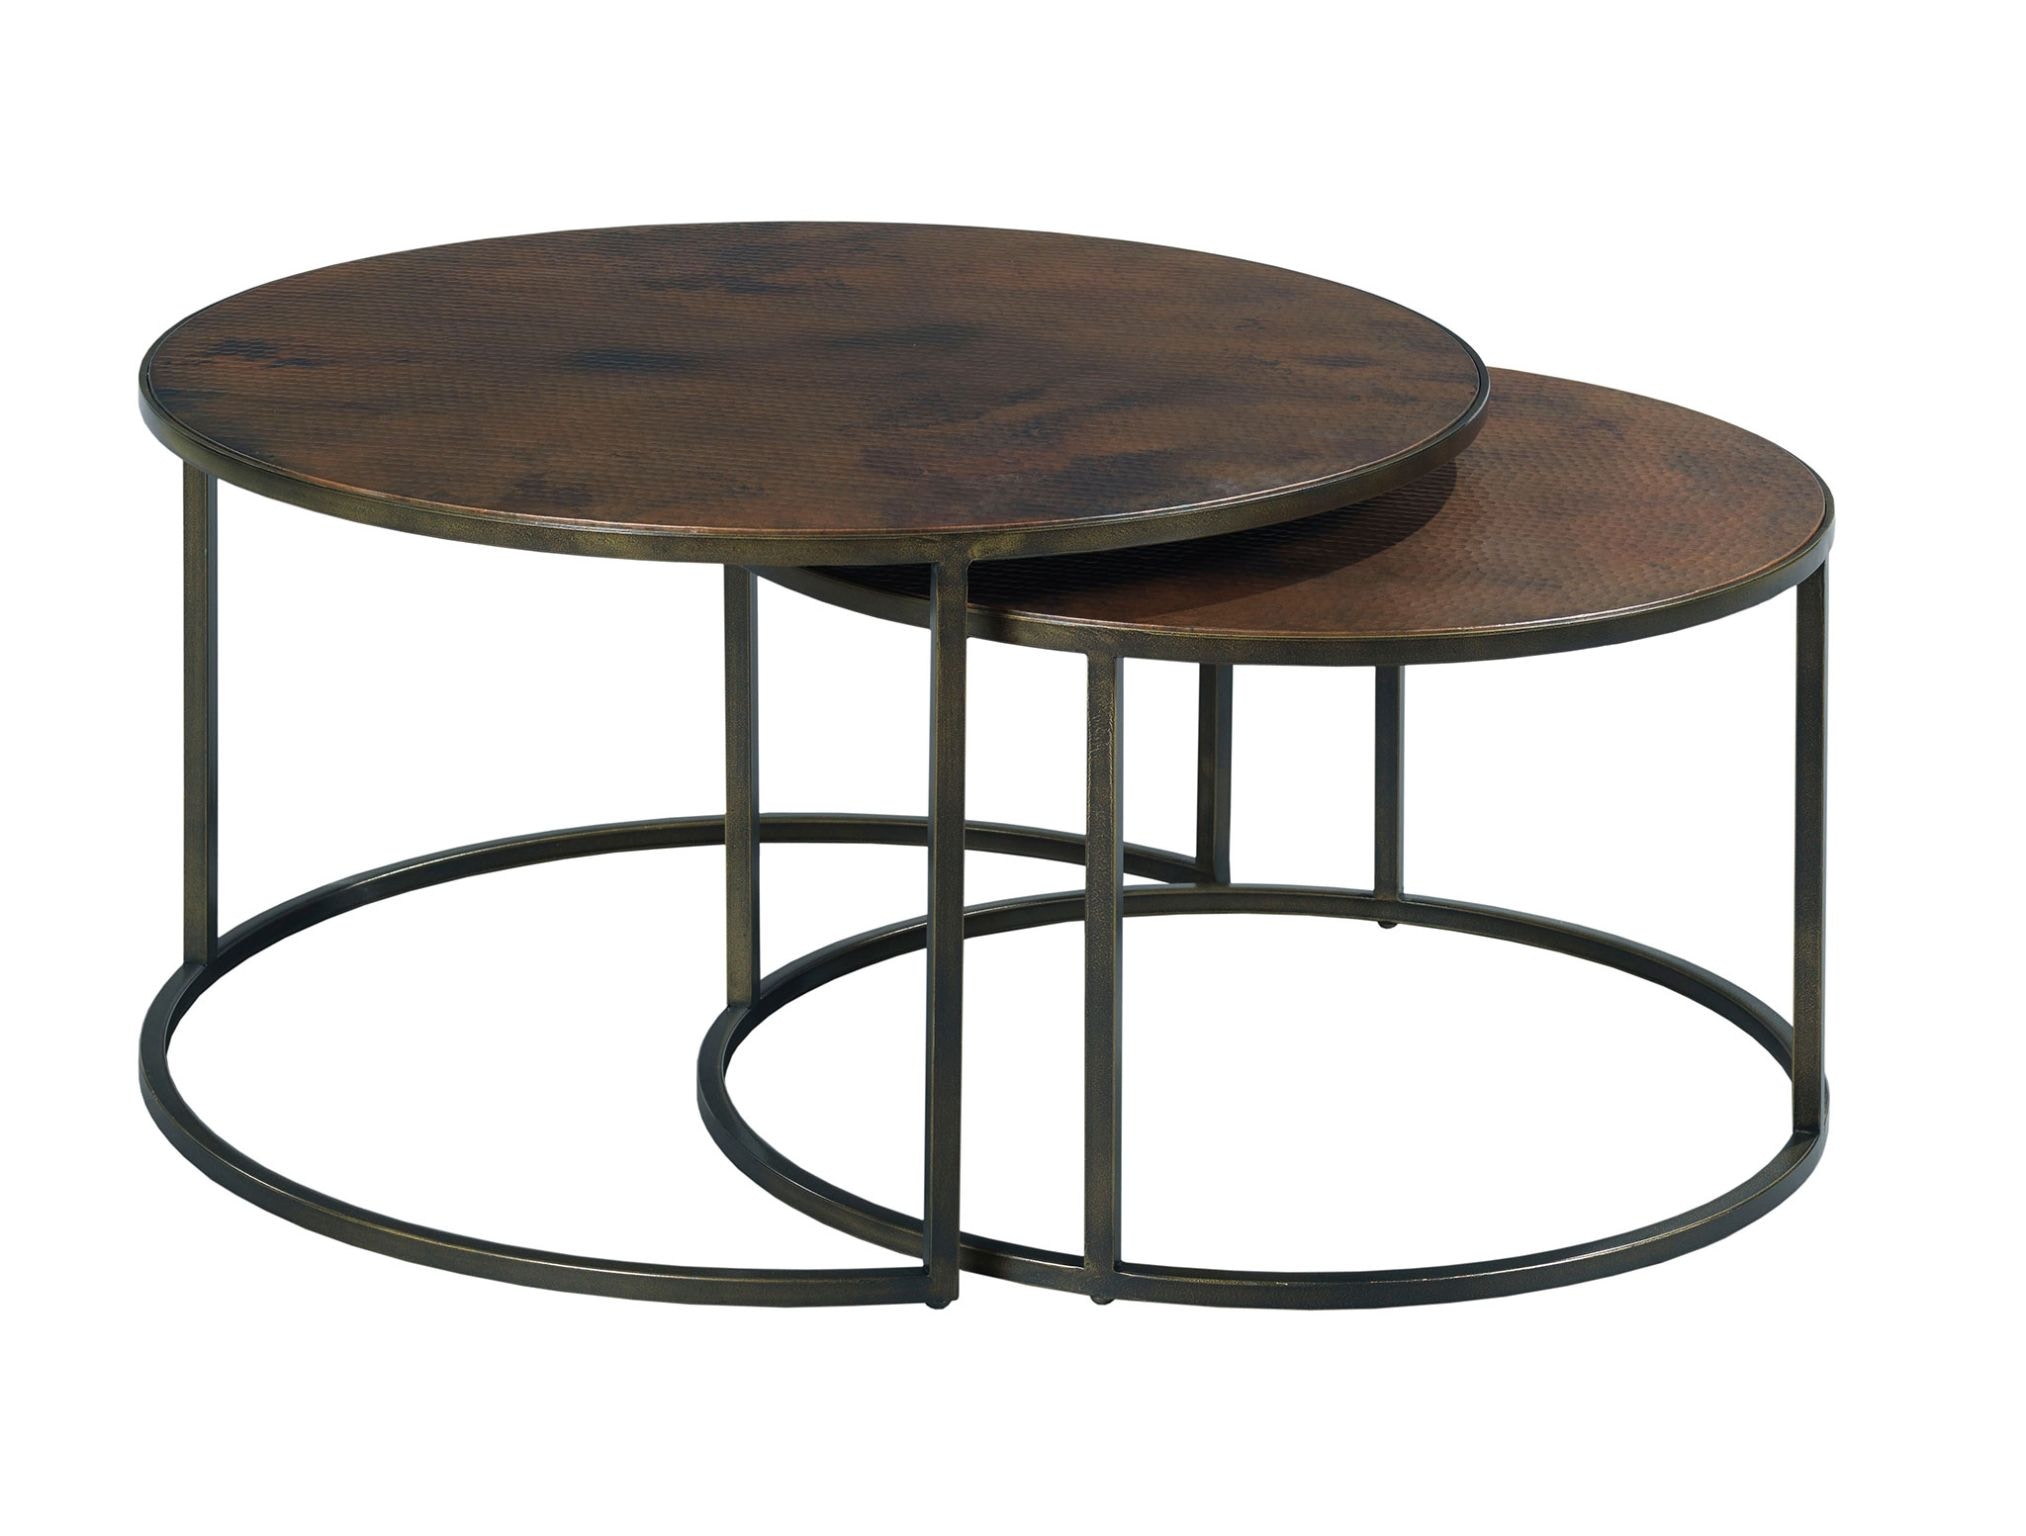 Стол круглый 1 м диаметр. Кофейный столик Orion small Coffee Table alr1573. Круглый стол AMCLASSIC aim Dining Table. Журнальный столик Round Nesting Coffee Table. Столик круглый.